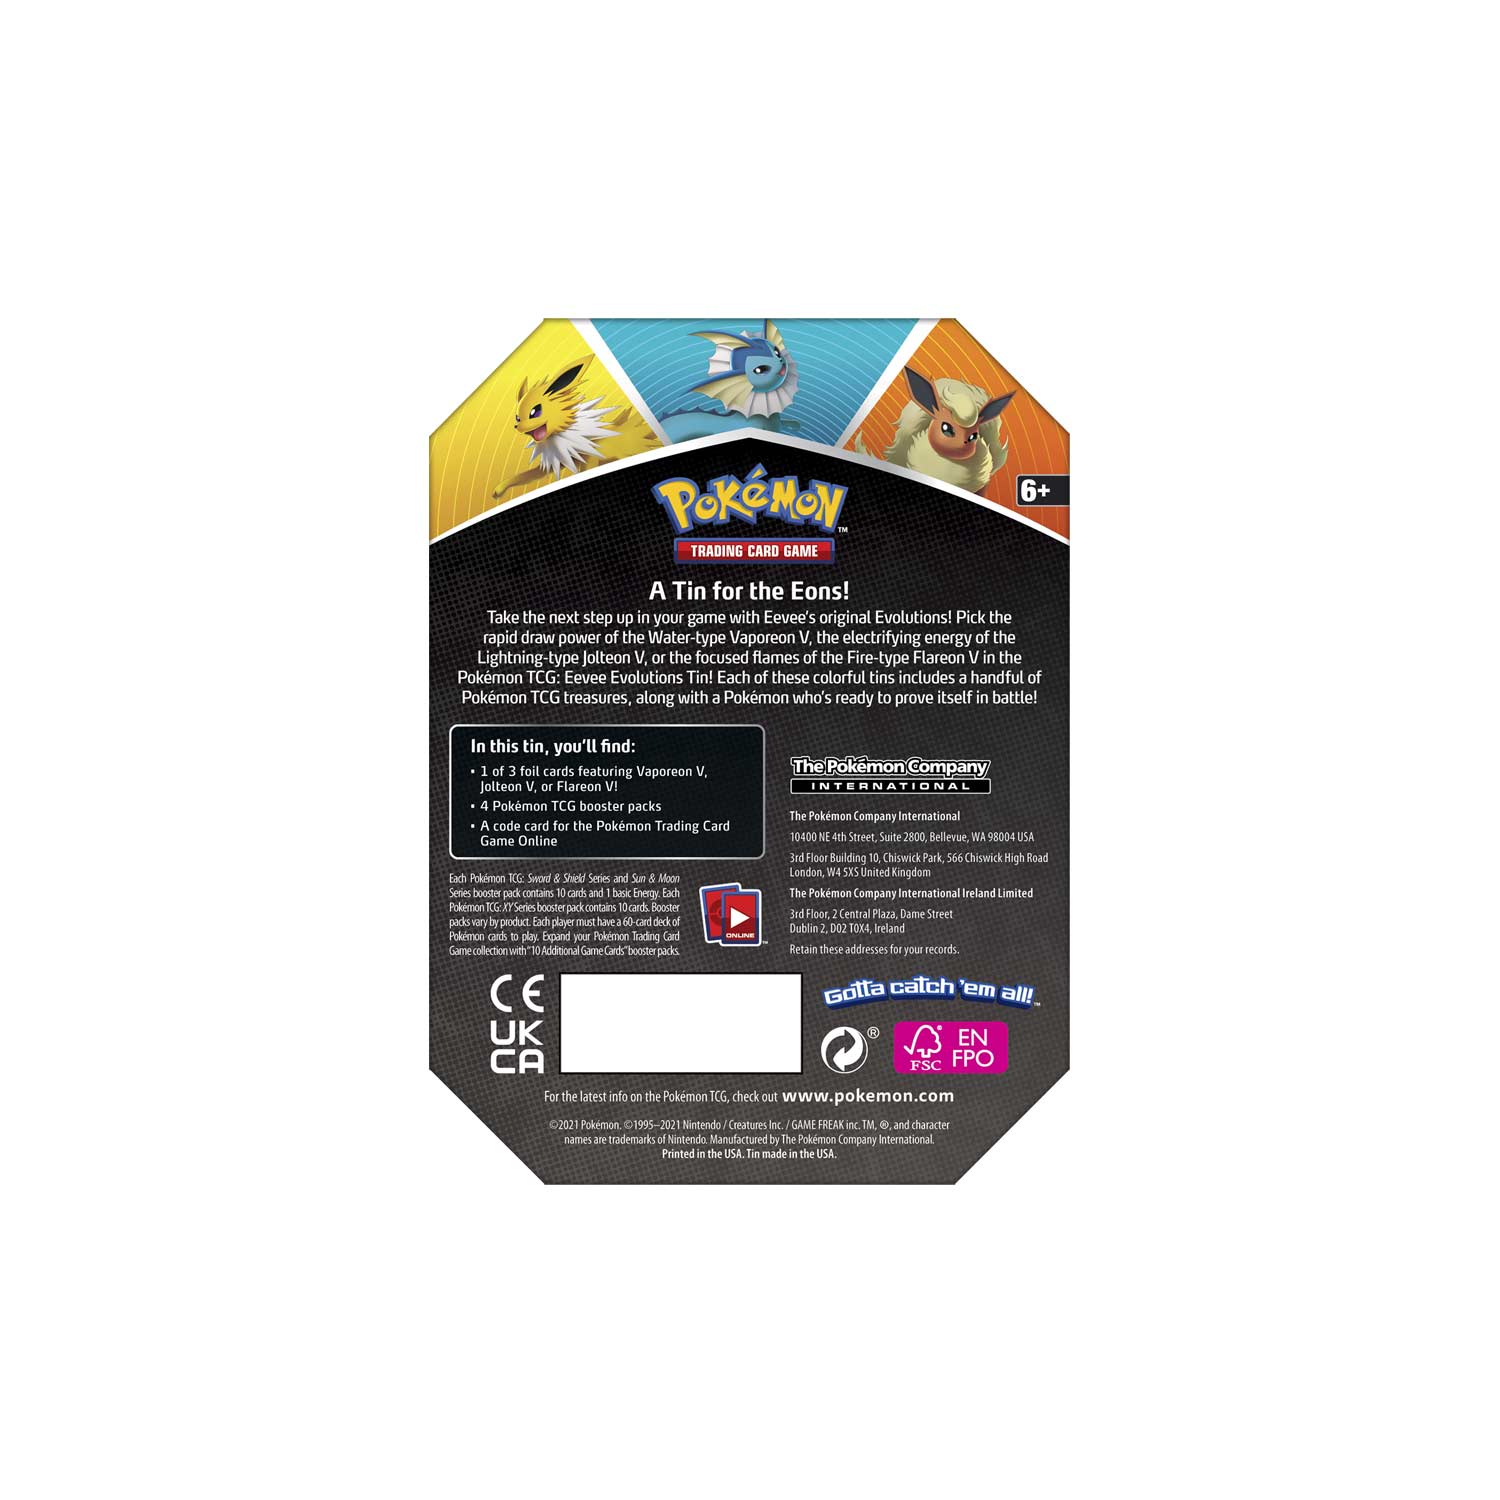 Pokémon TCG: Eevee Evolutions Tin (Flareon V)